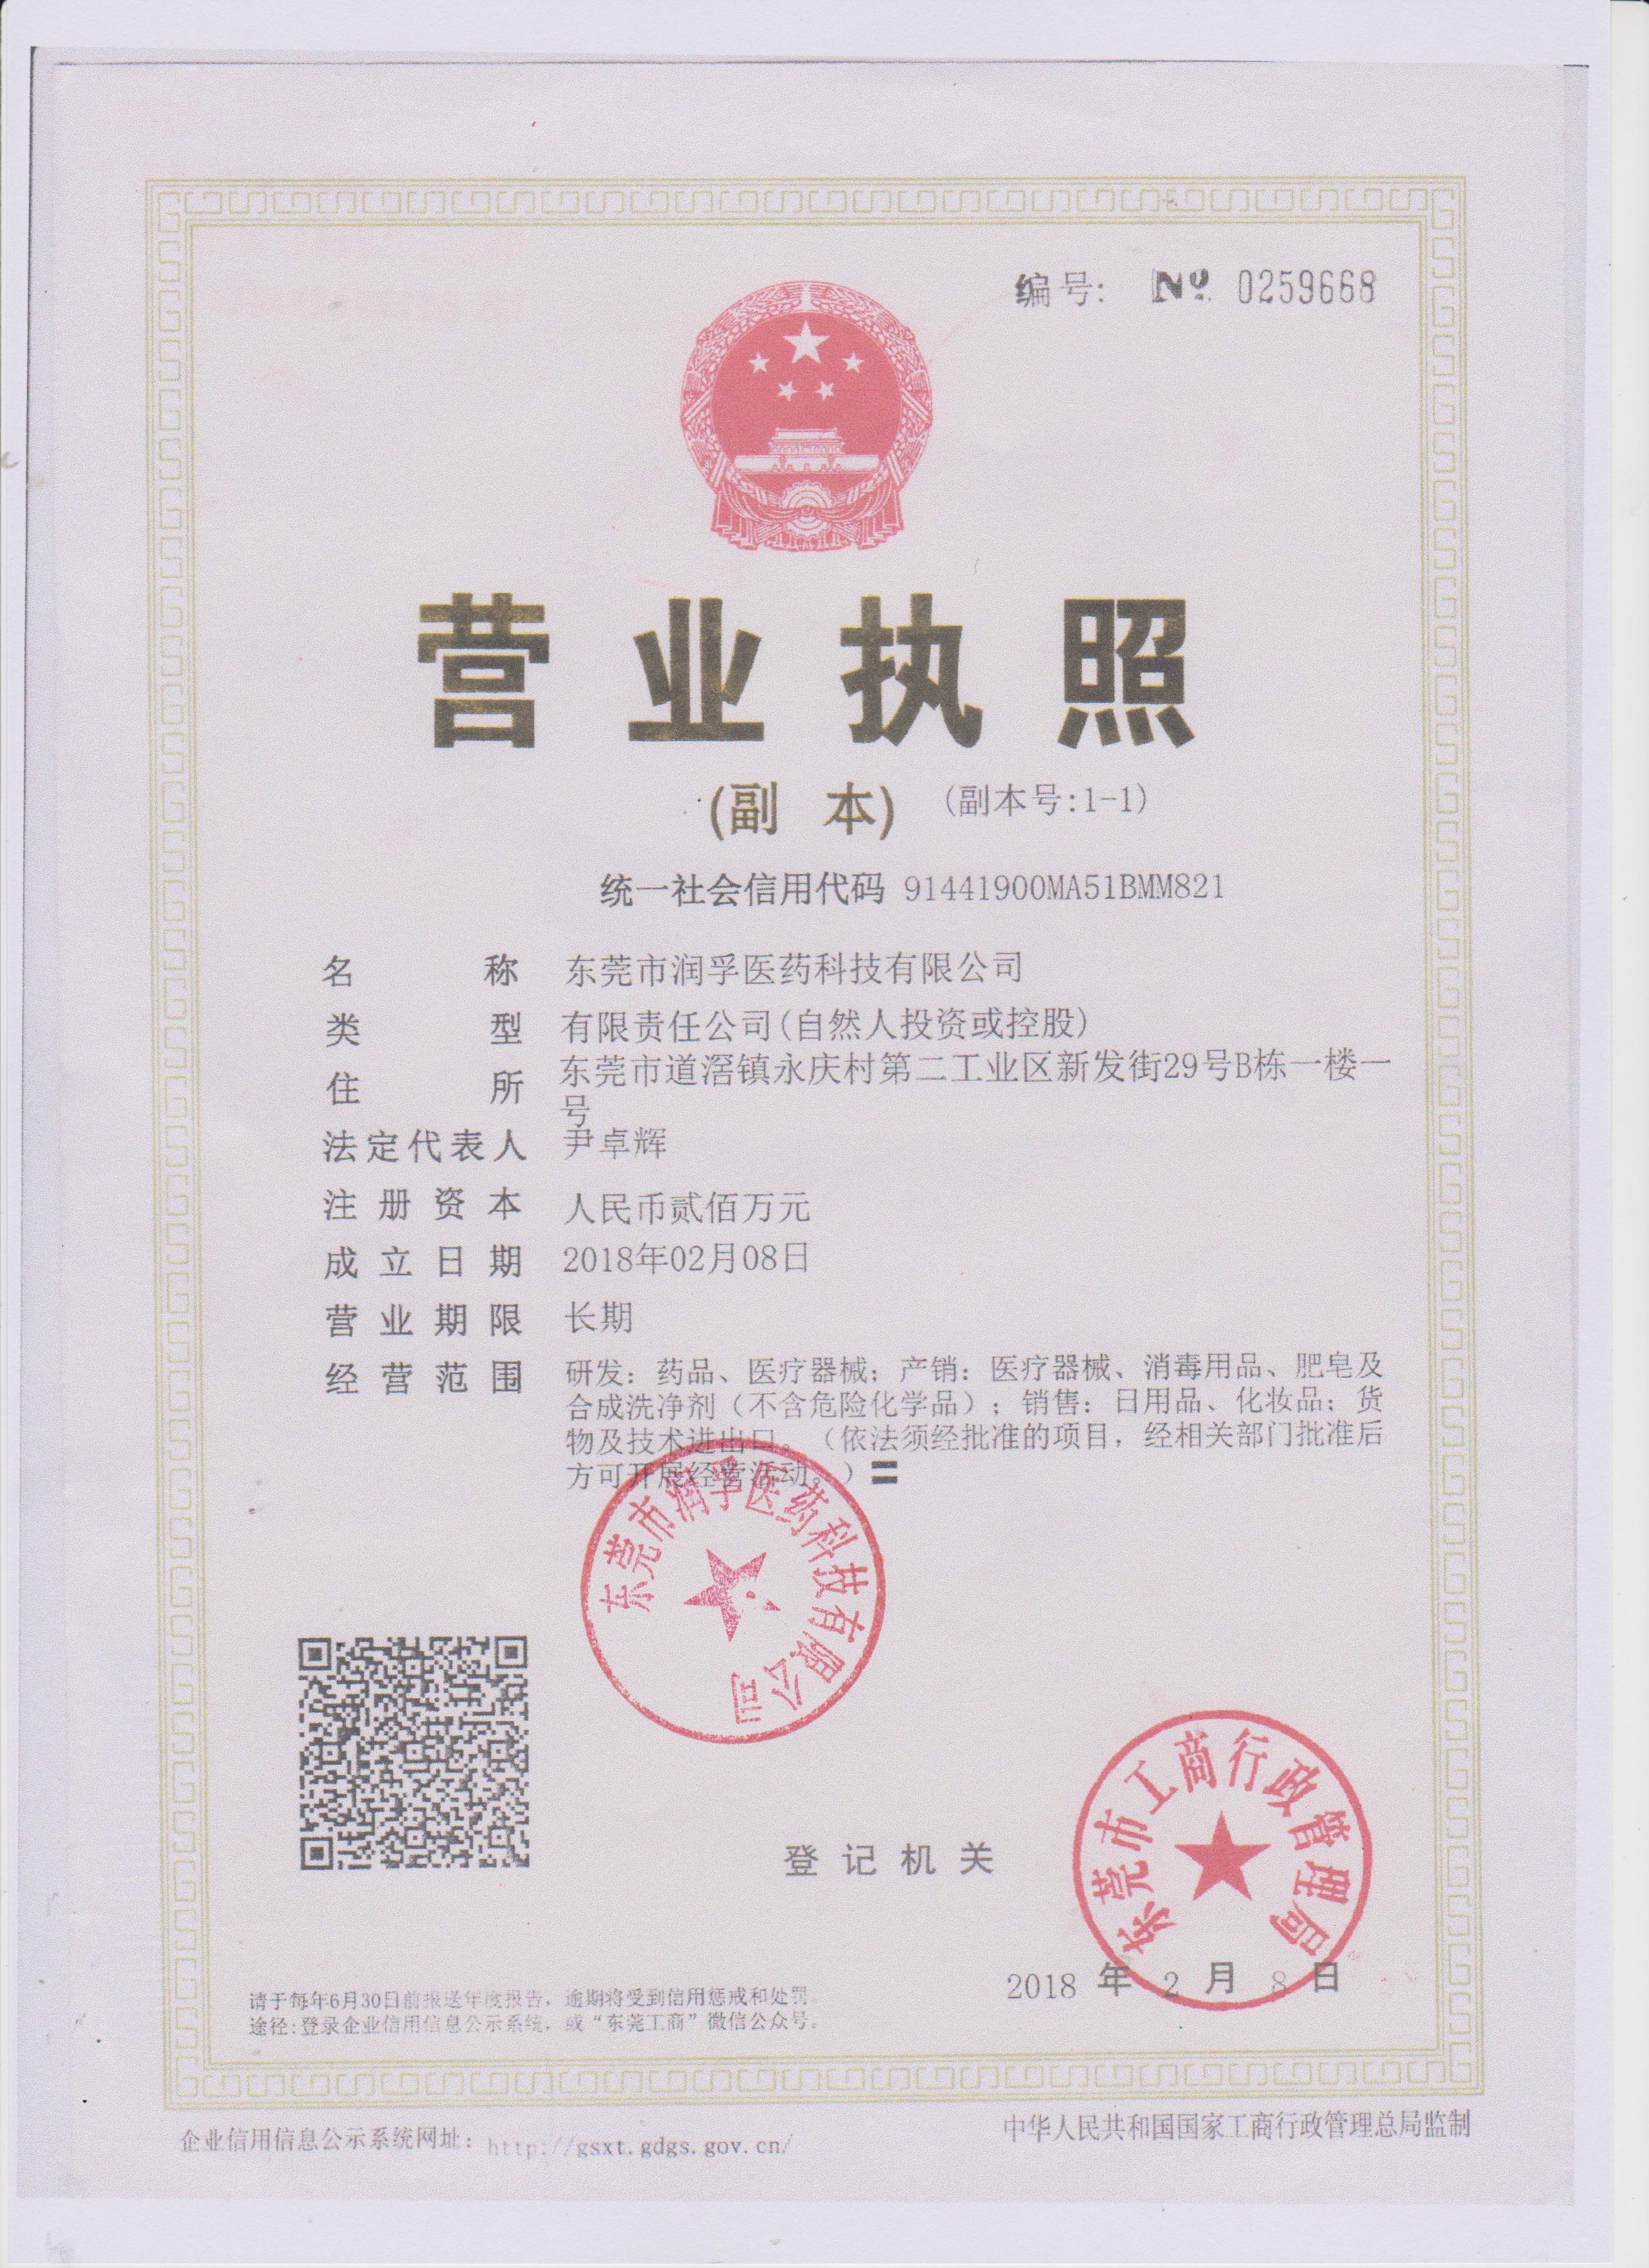 Runfu Pharmaceutical Technology Co., Ltd